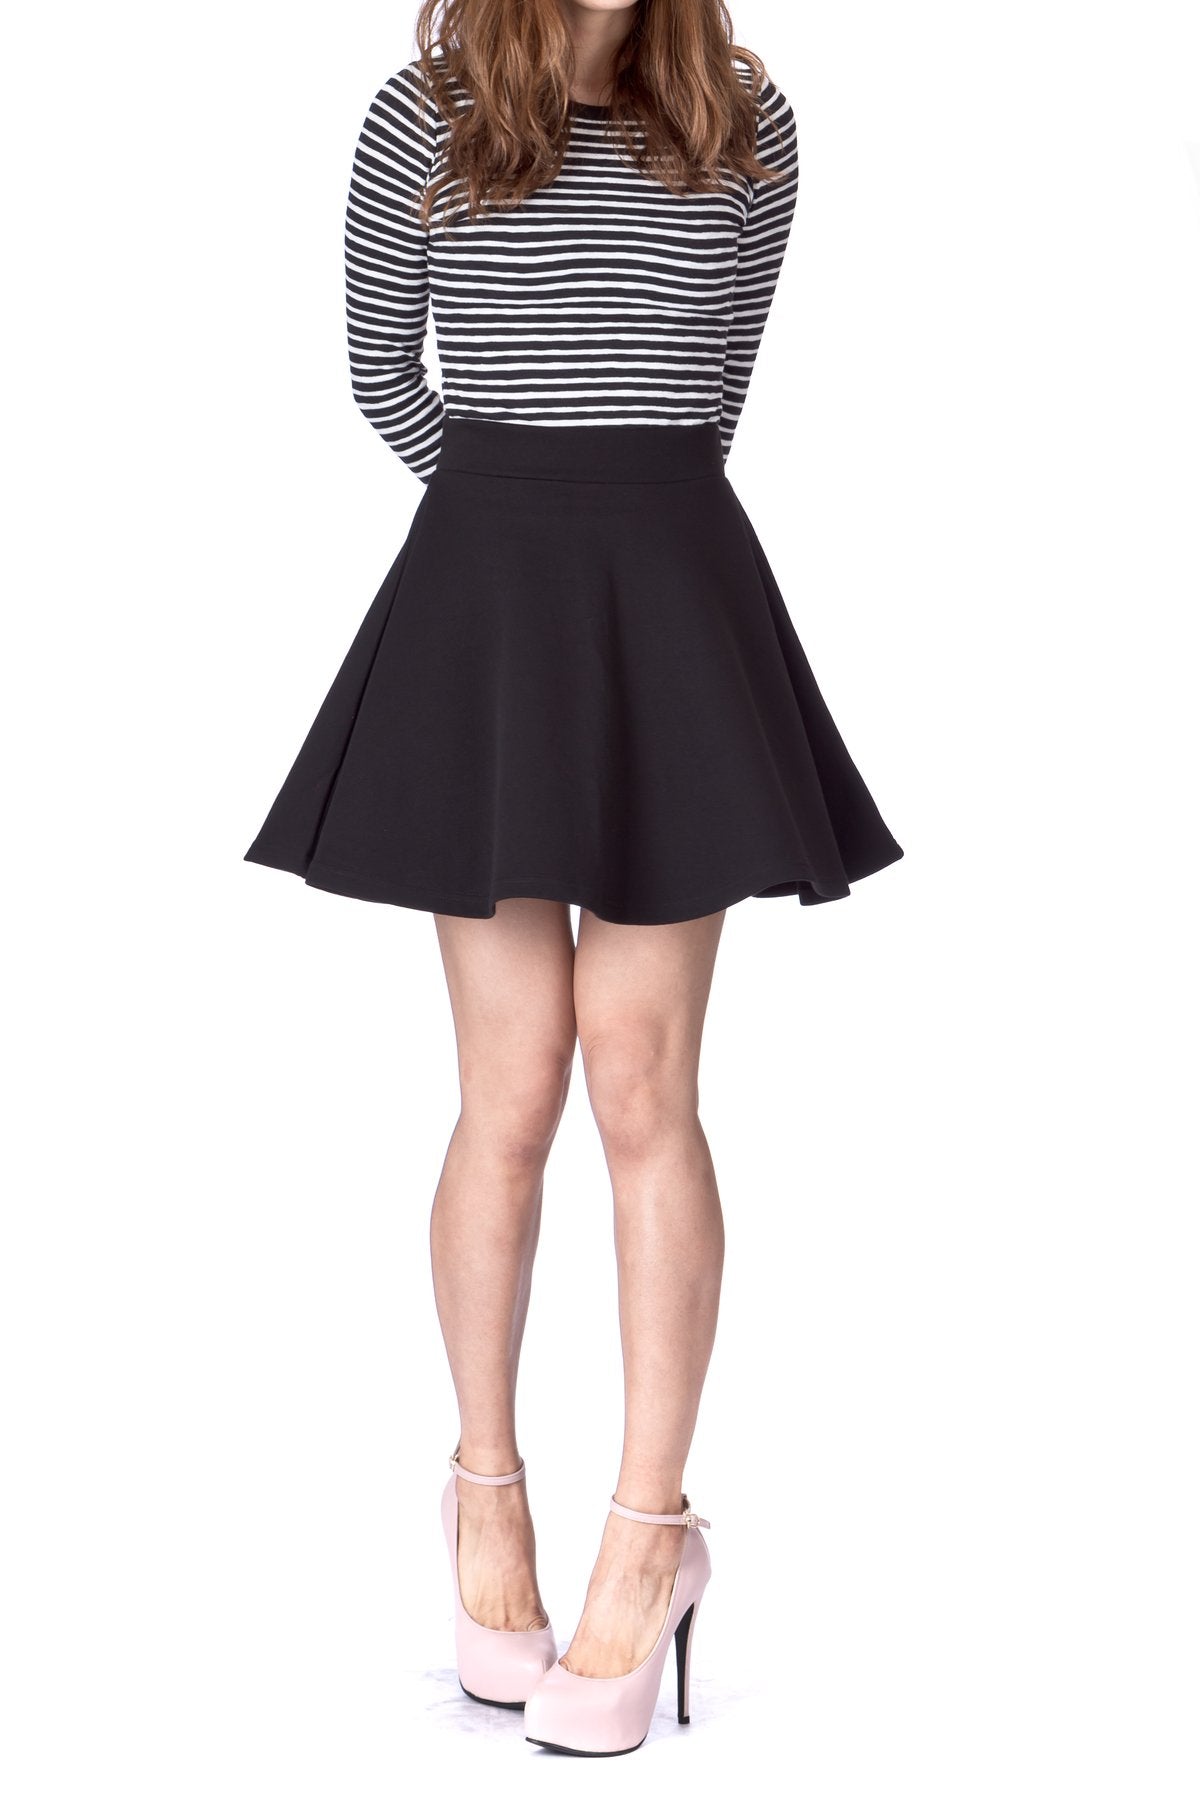 Basic Solid Stretchy Cotton High Waist A line Flared Skater Mini Skirt Black 01 1